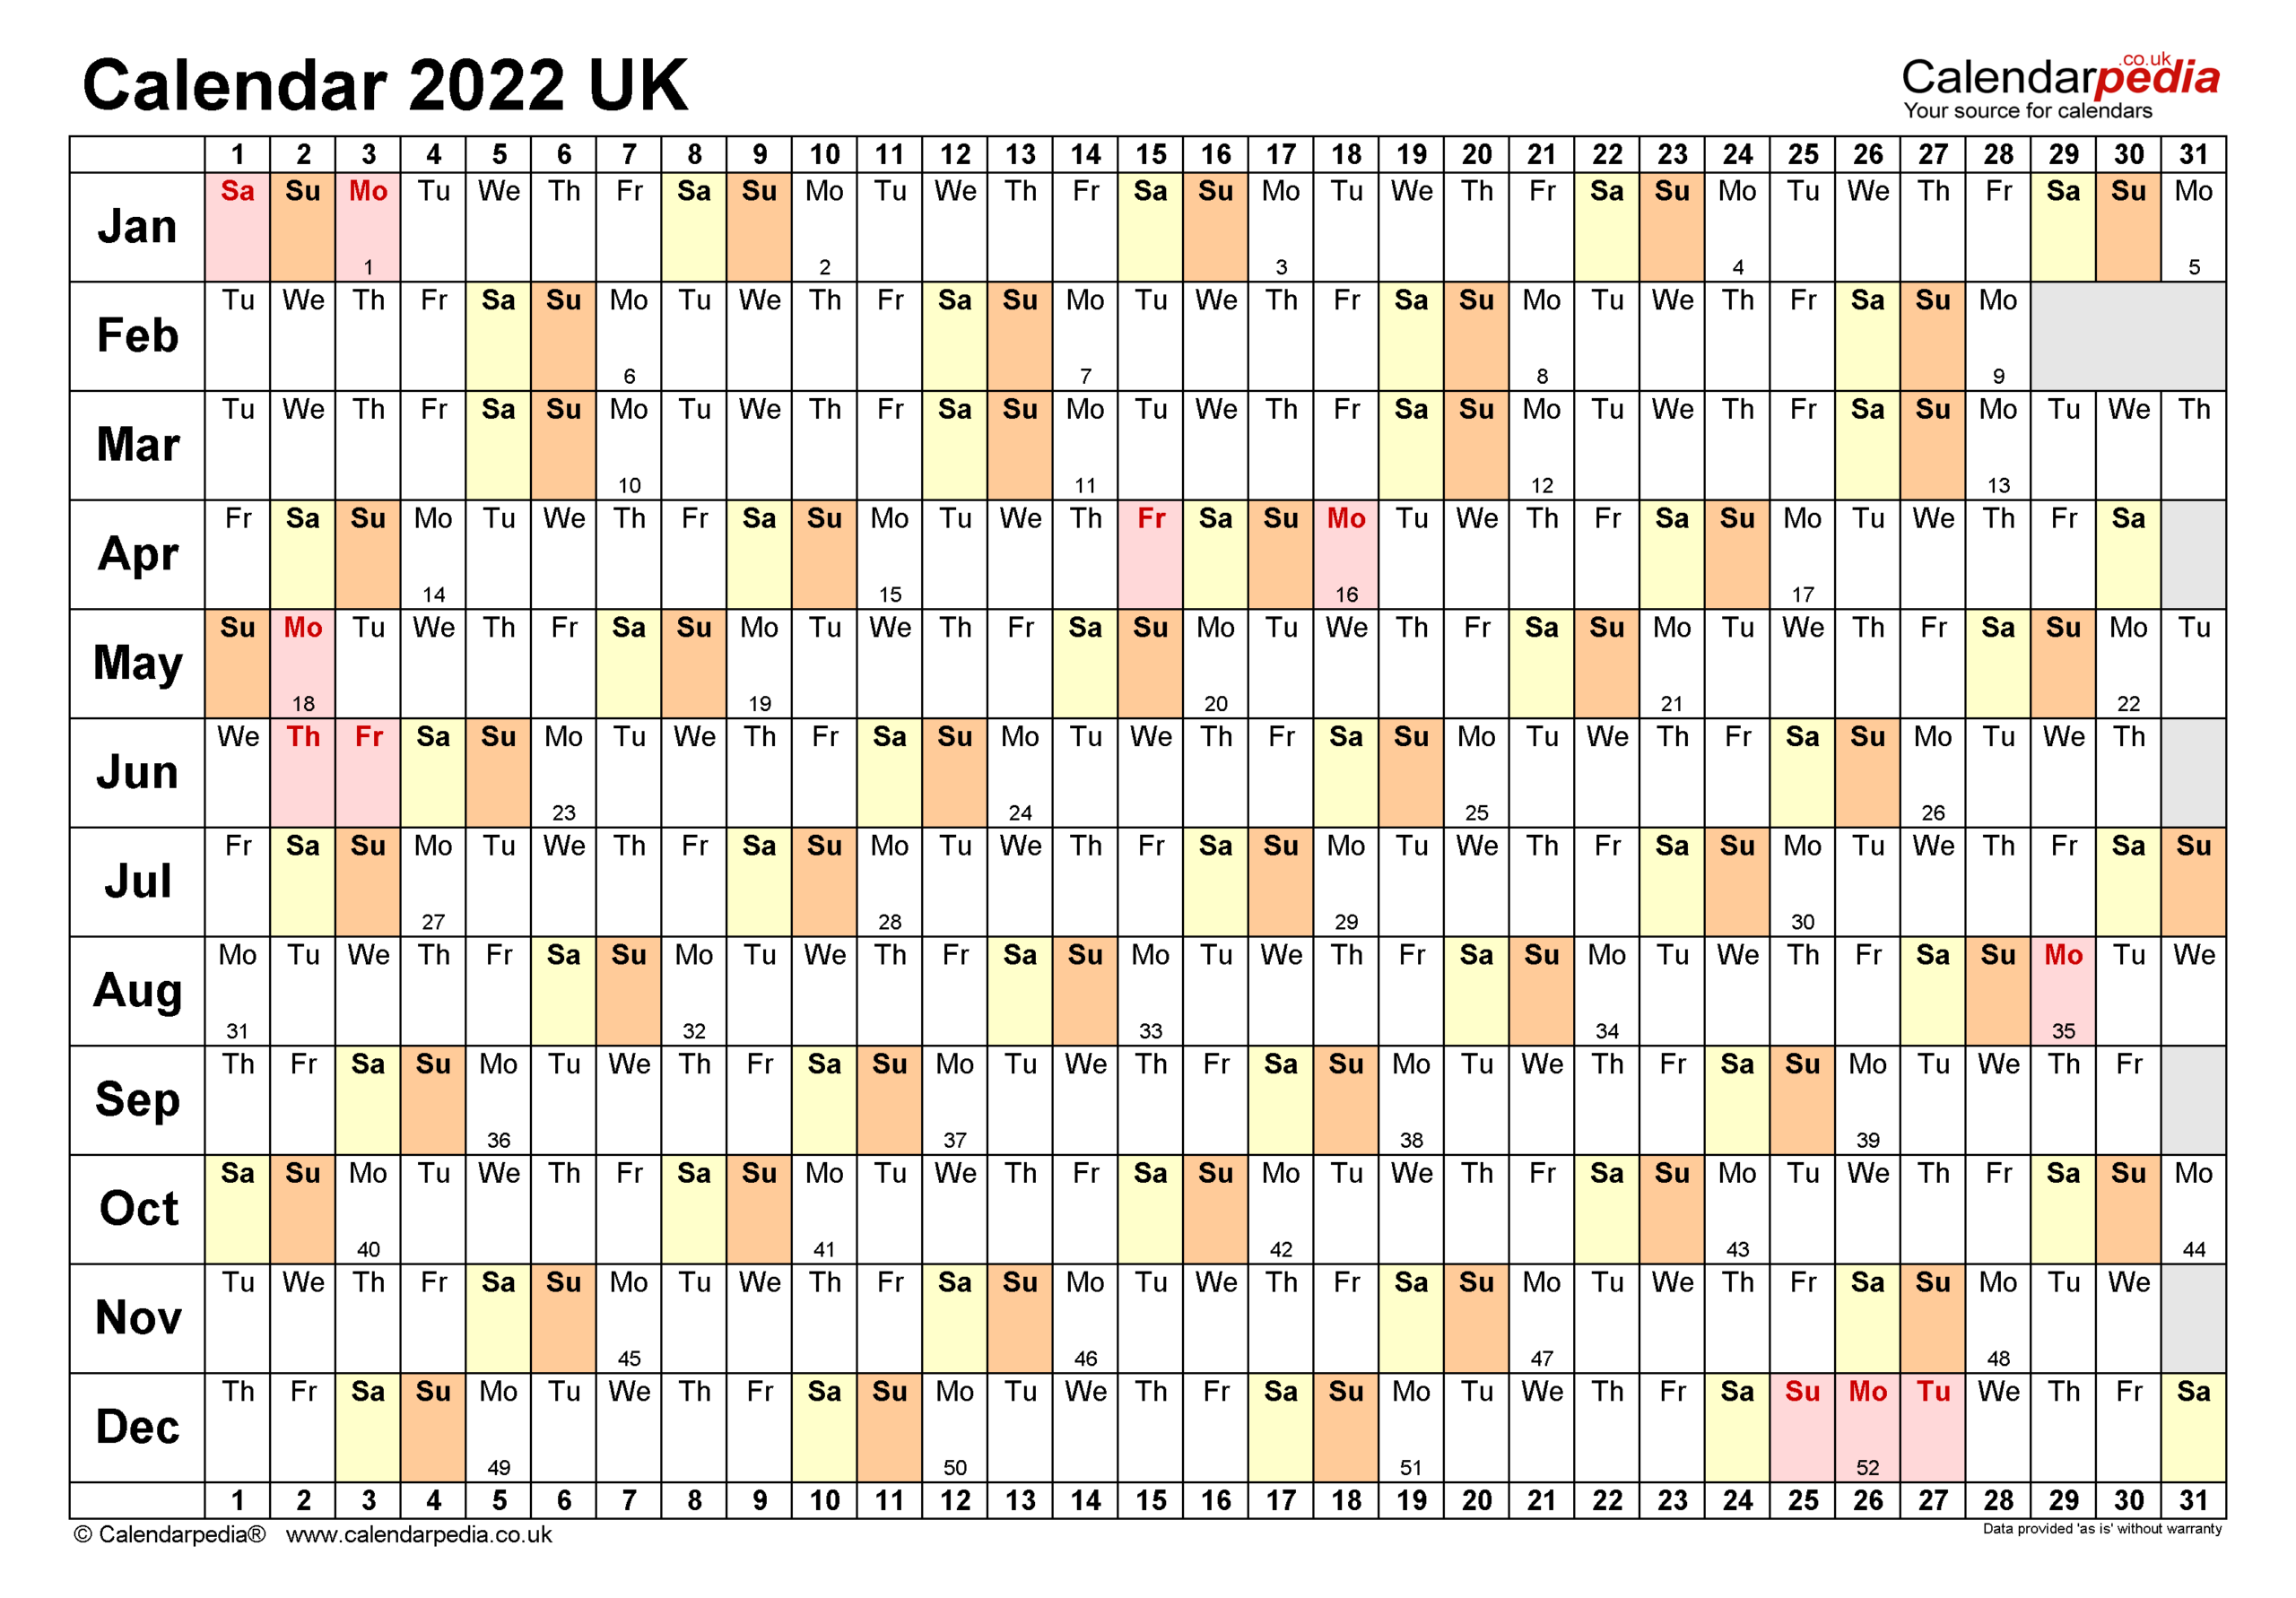 Calendar 2022 (Uk) - Free Printable Microsoft Word Templates-Calendar 2022 Uk With Bank Holidays